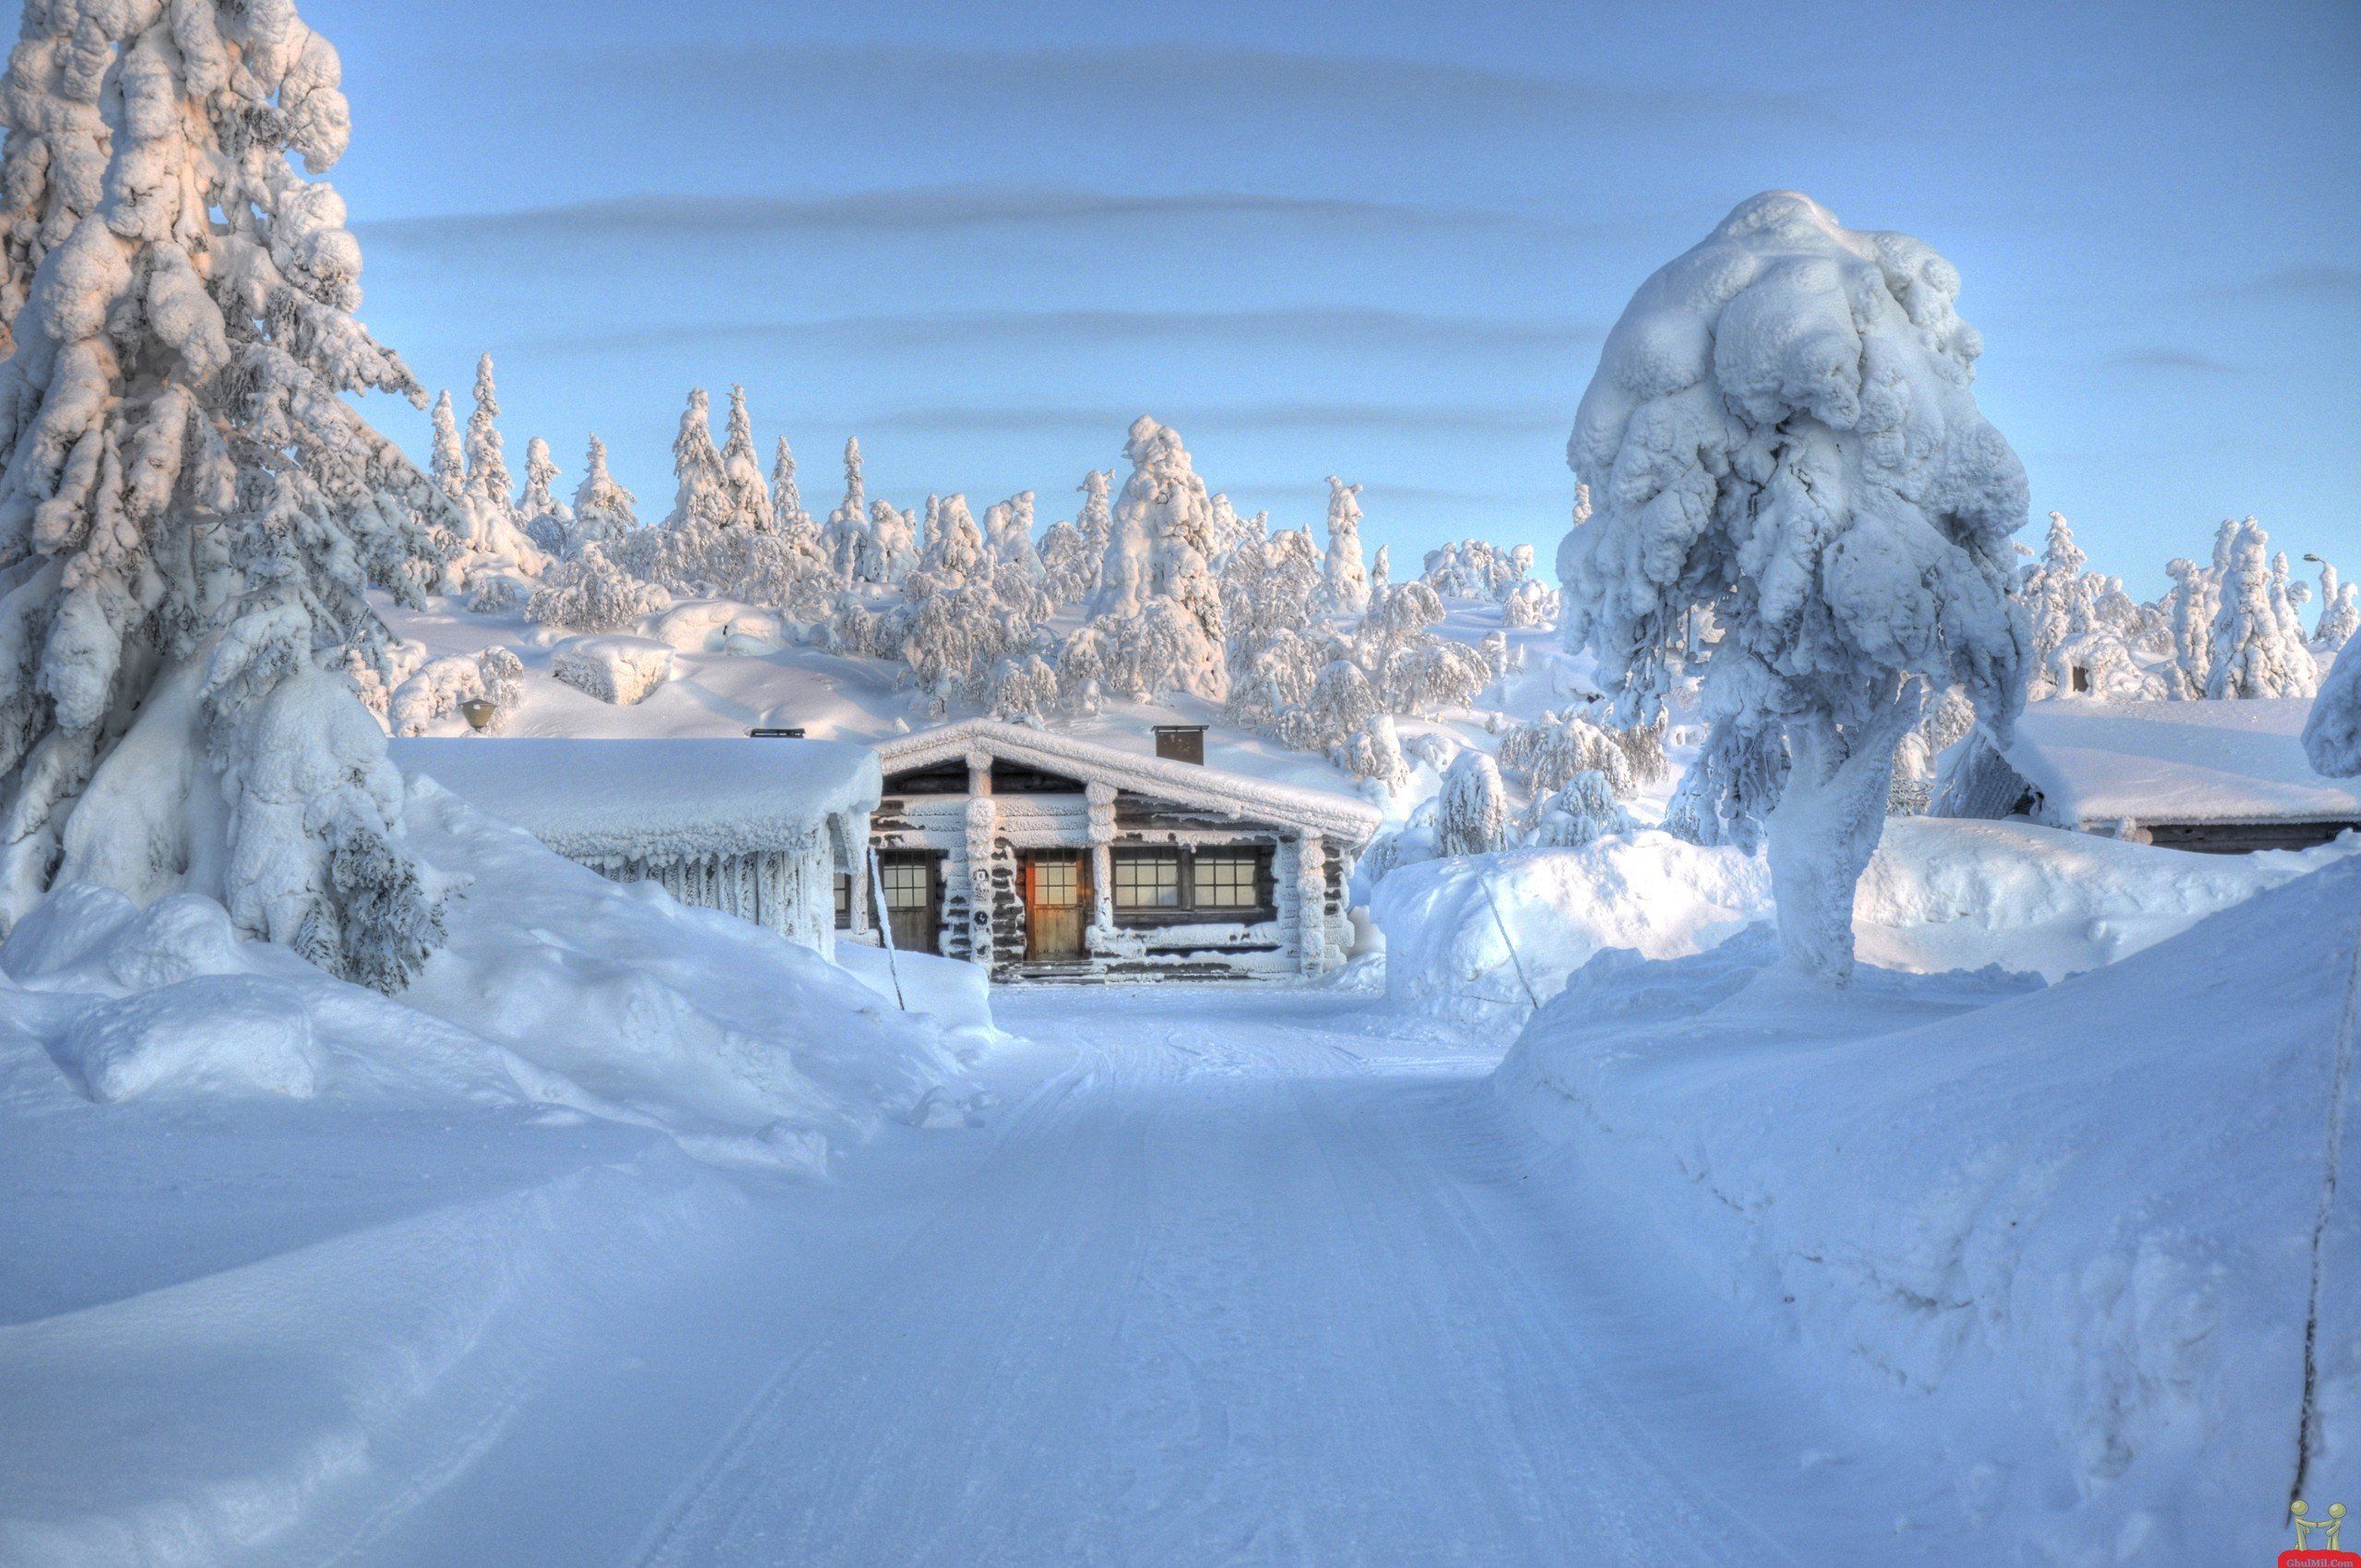 Lapland 4K wallpaper for your desktop or mobile screen free